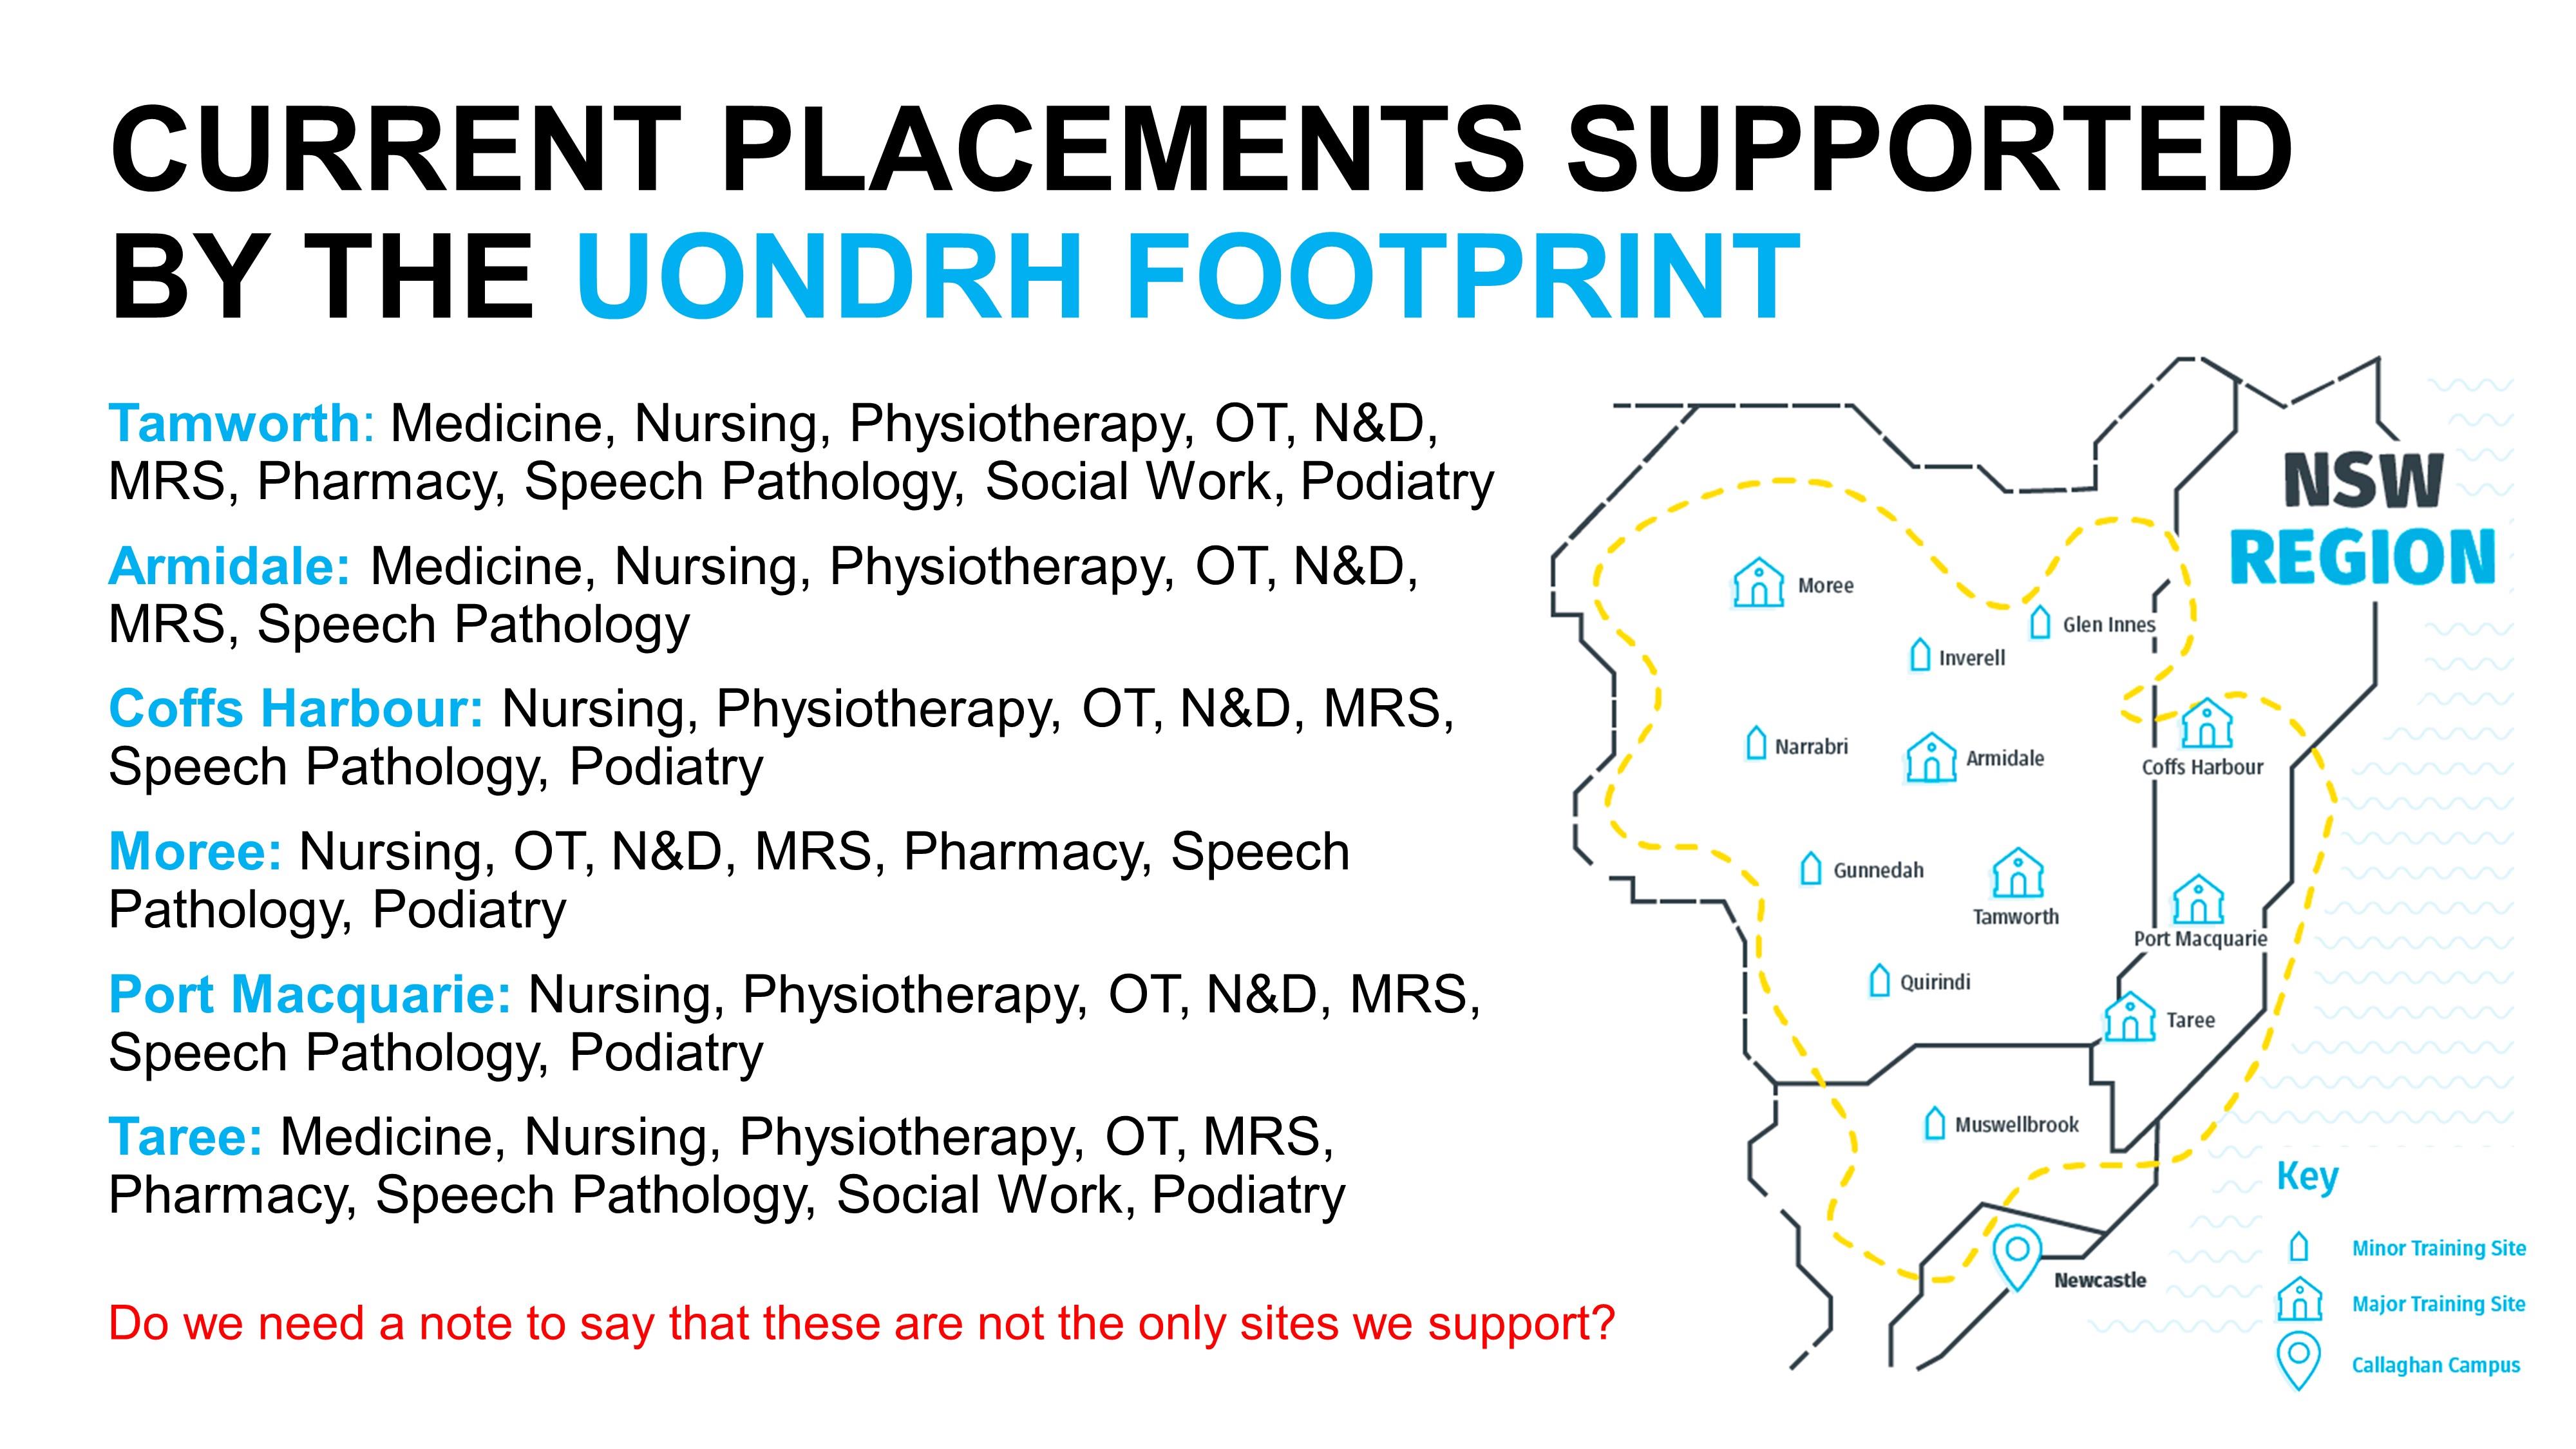 UONDRH Footprint map